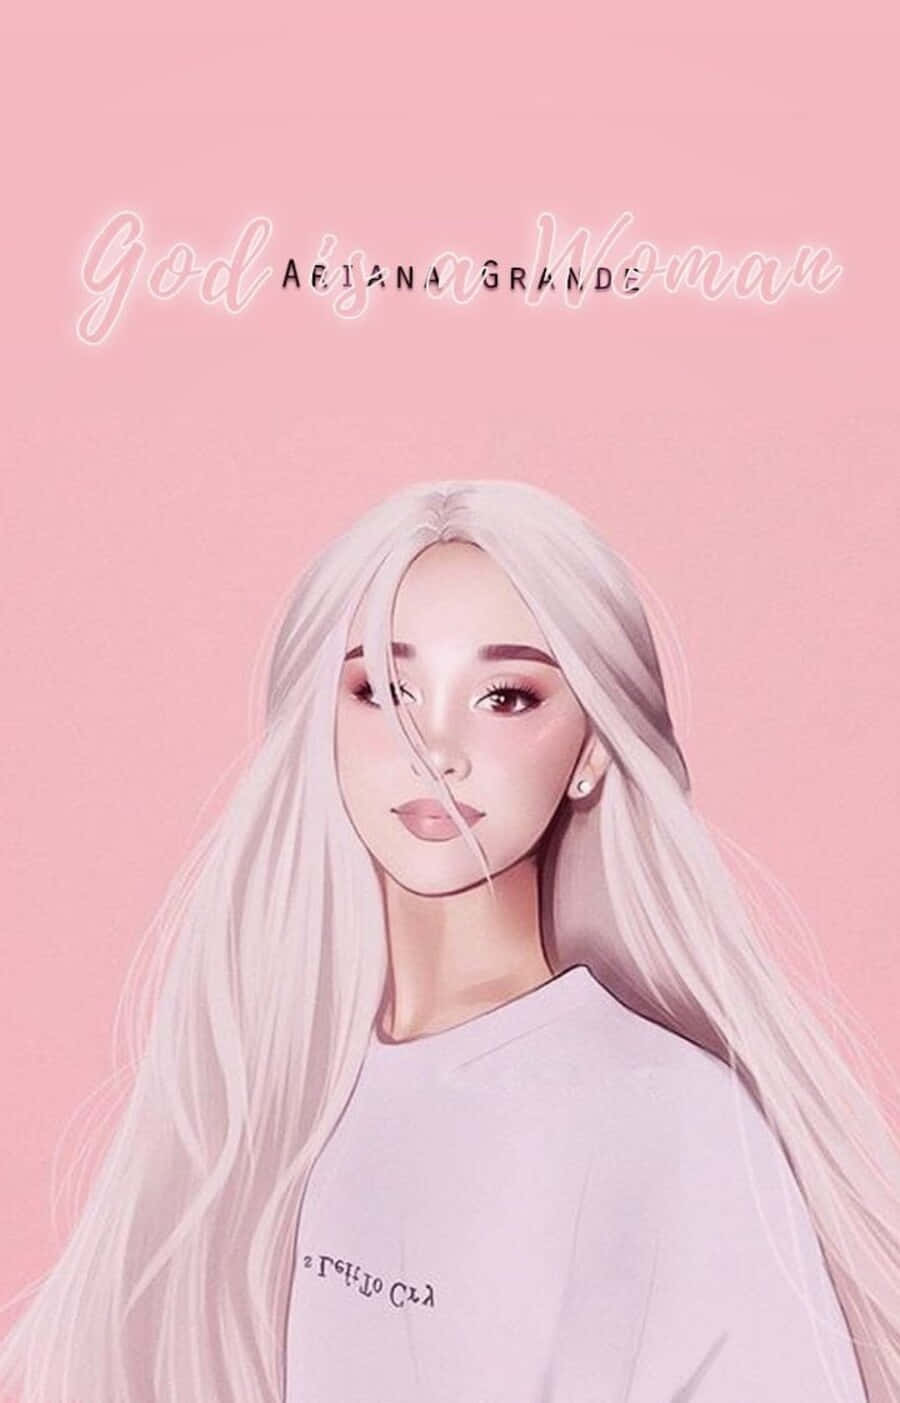 Aesthetic Ariana Grande Wearing Vintage Rose Tinted Glasses Wallpaper